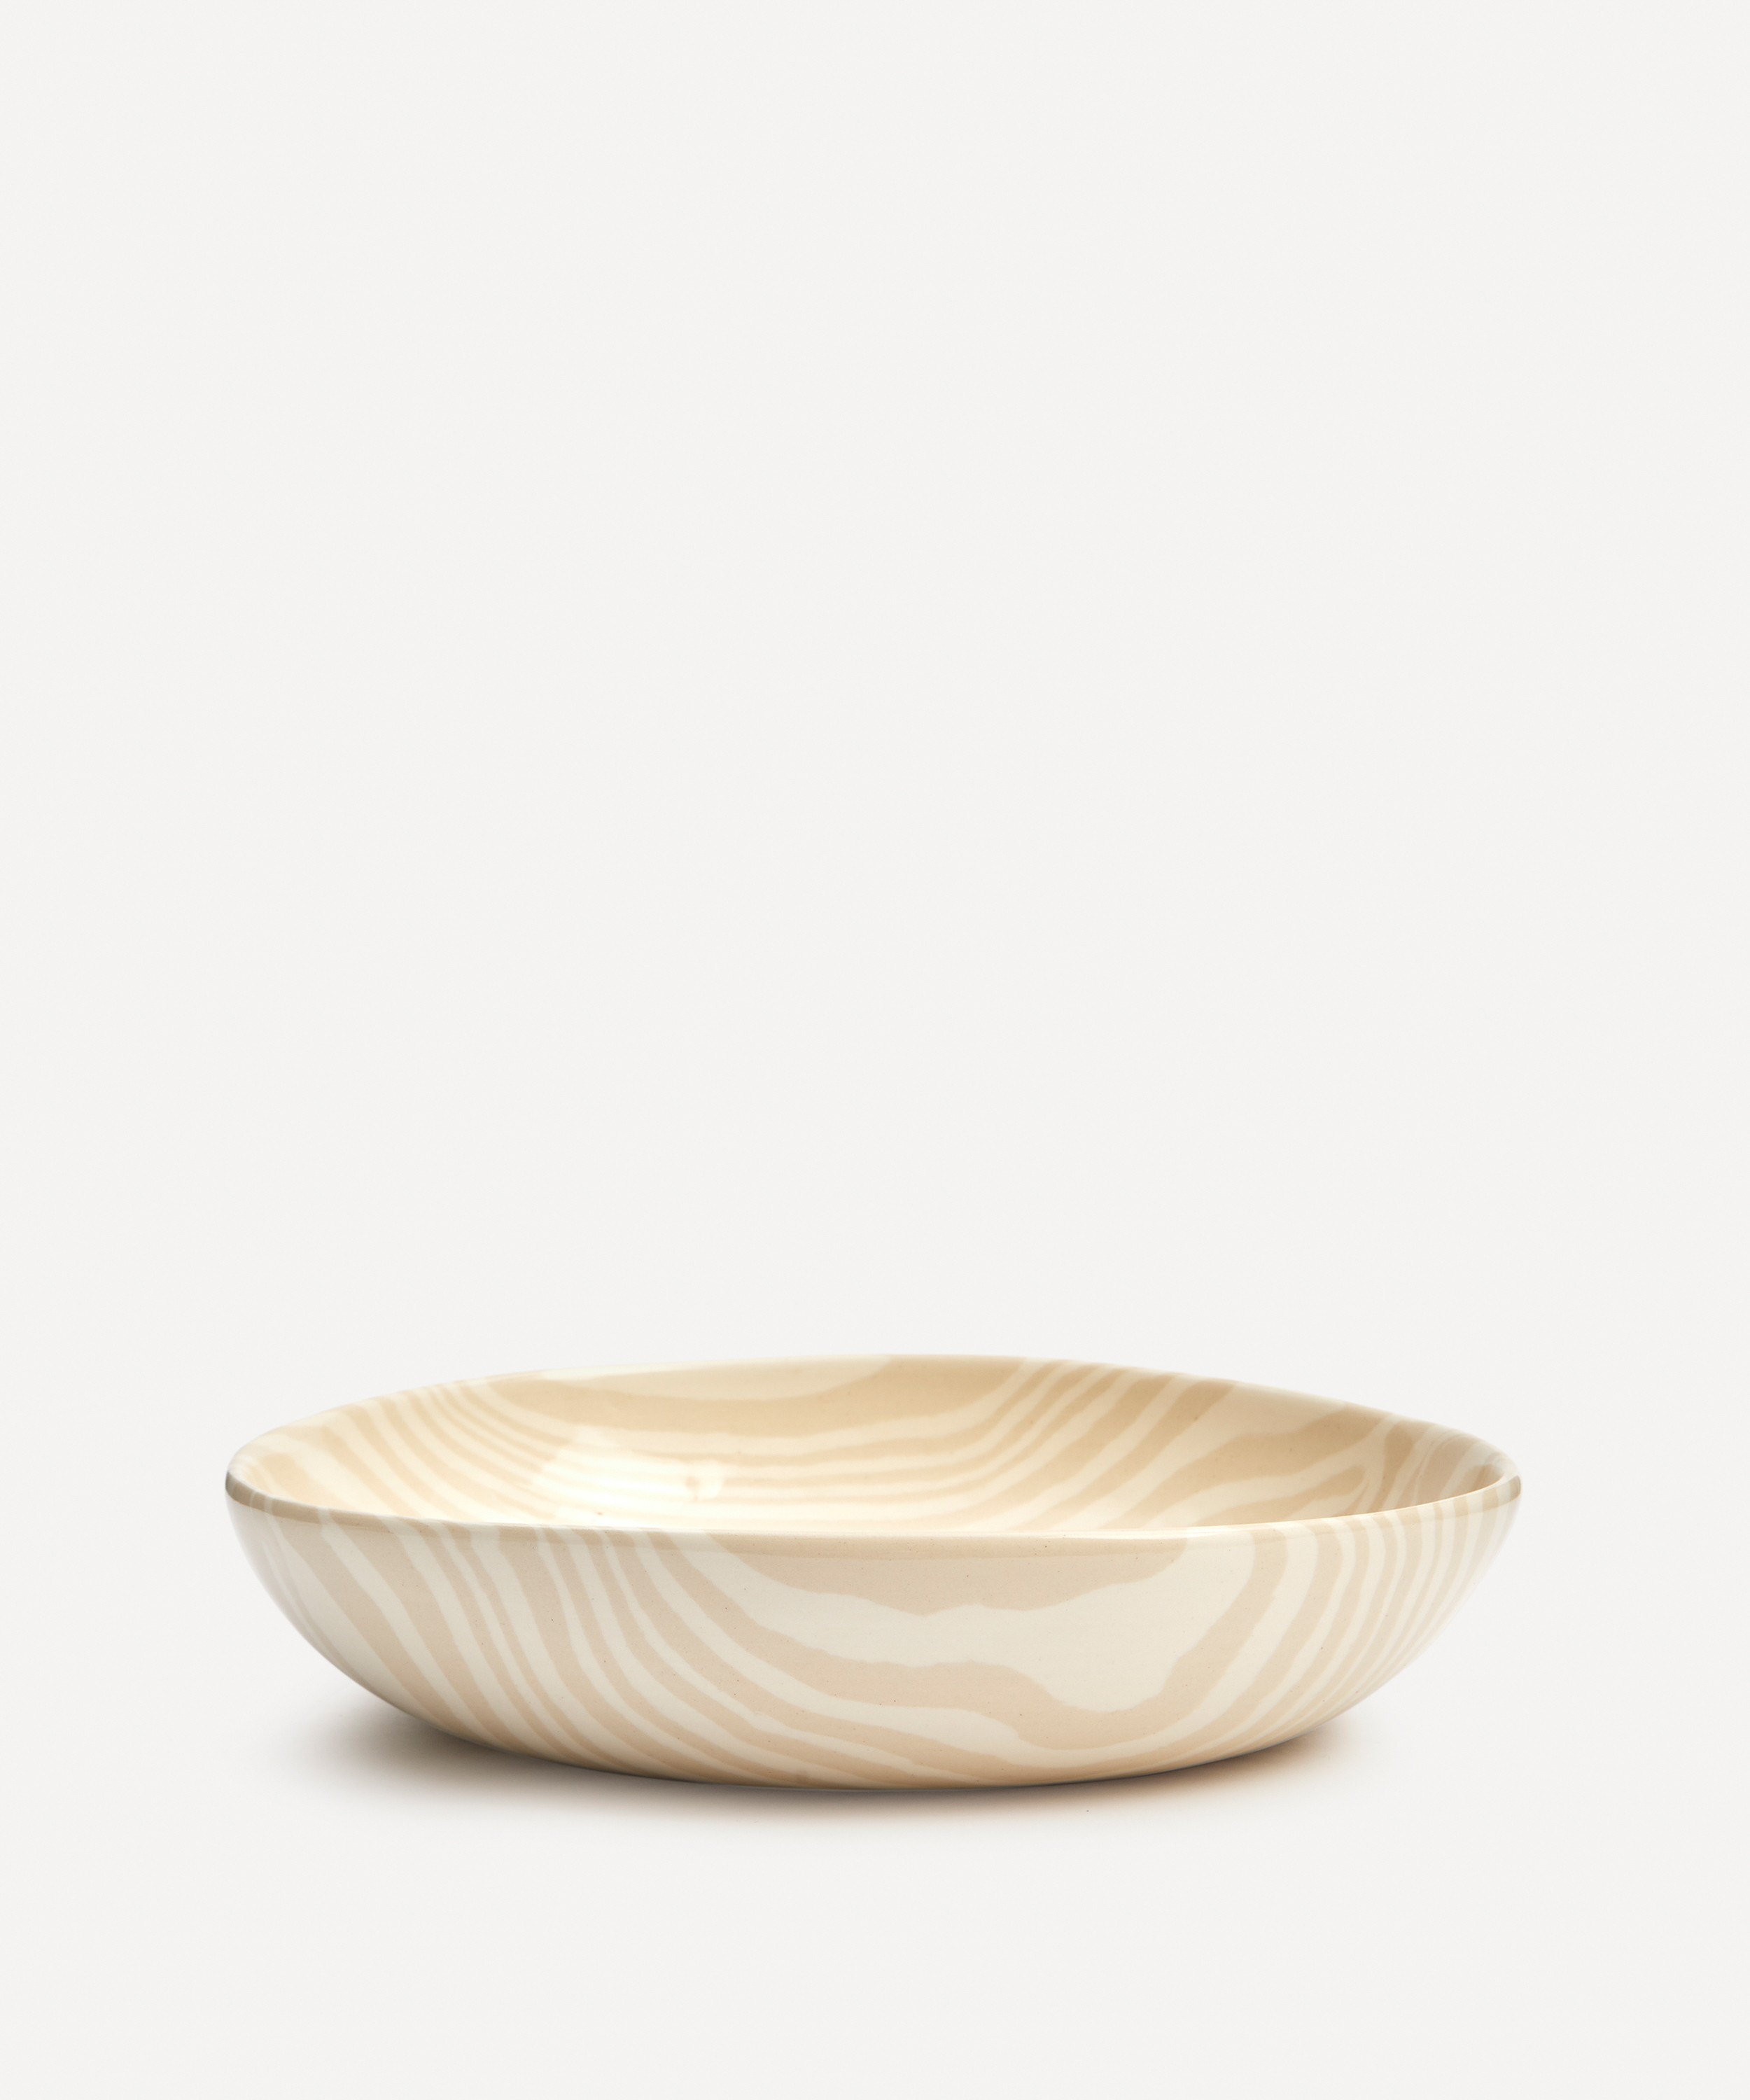 Henry Holland Studio - White on White Stripe Pasta Bowl